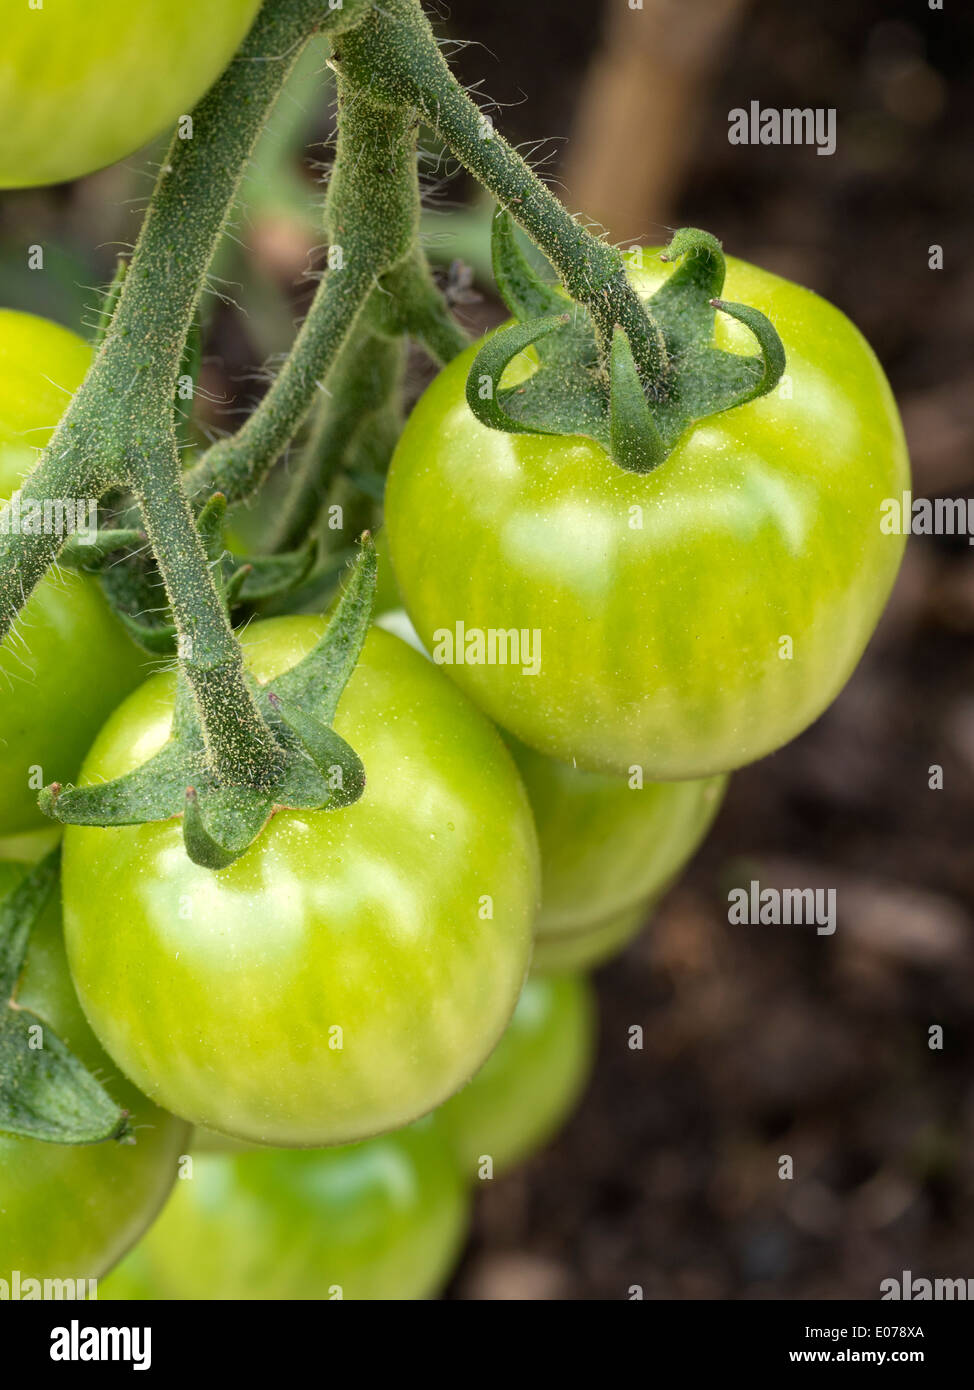 Unripe green cherry tomatoes ripening / growing on vine Stock Photo